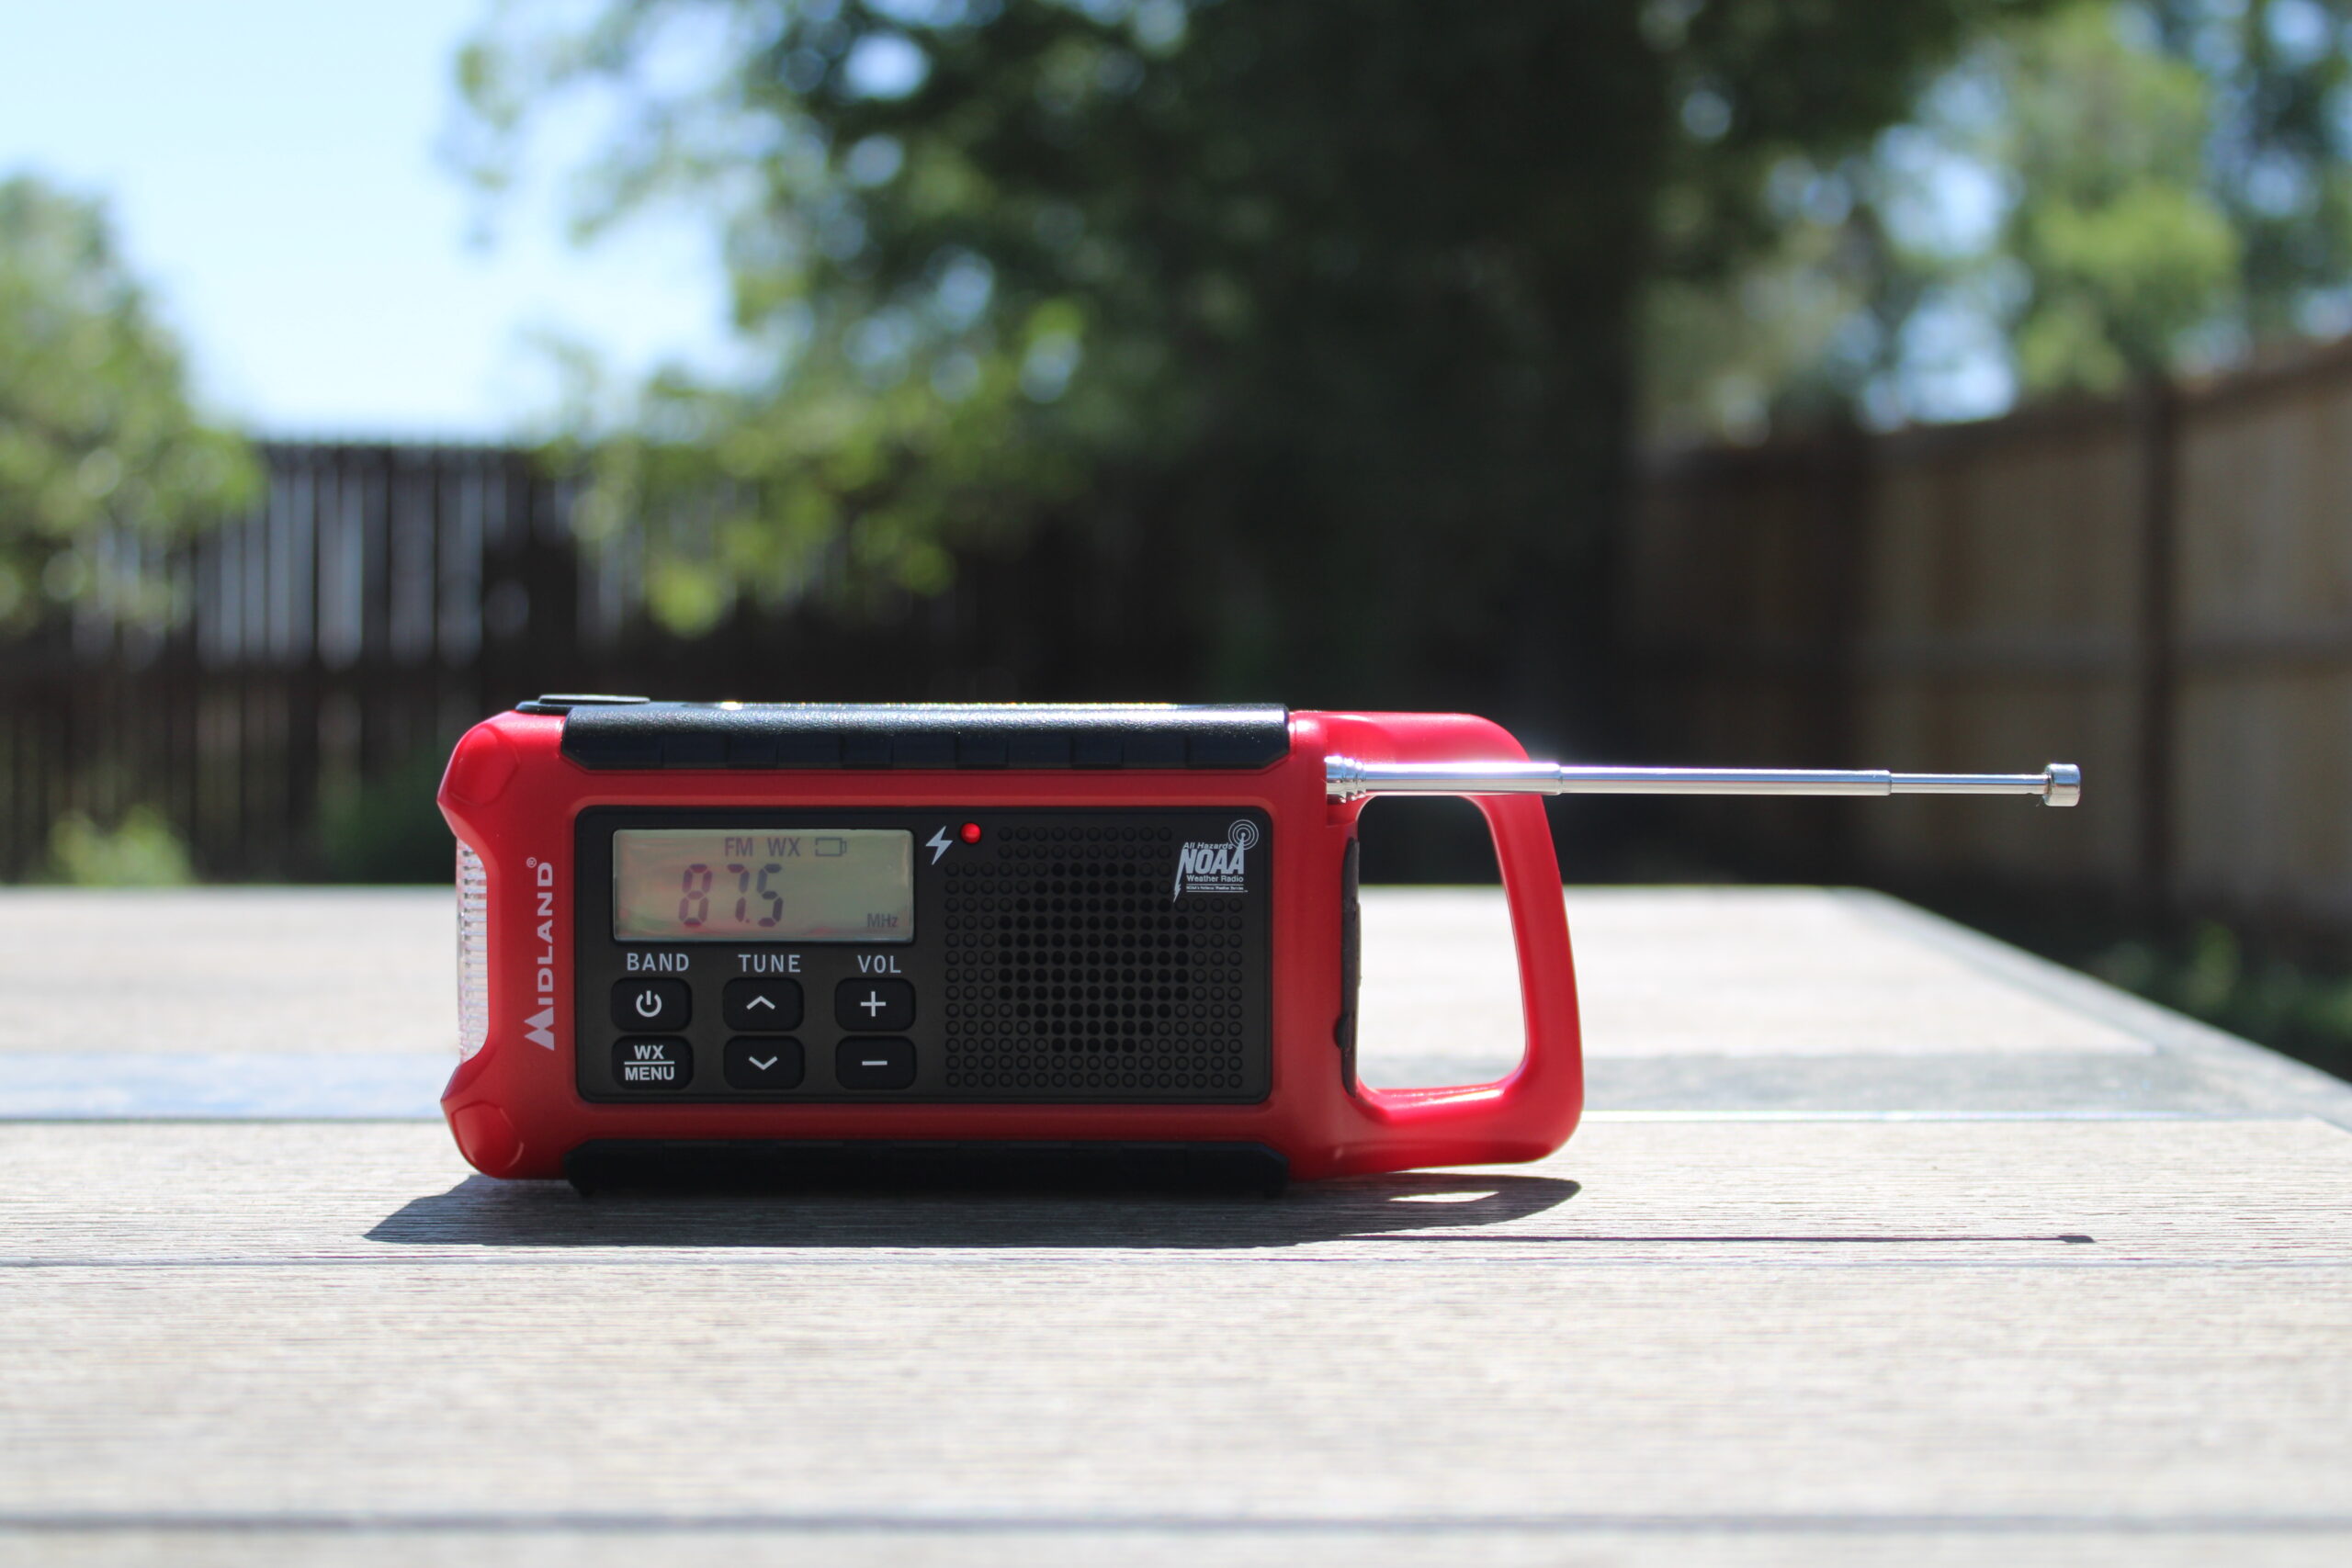 Midland ER210 Weather Alert Crank Radio is the best emergency radio overall.